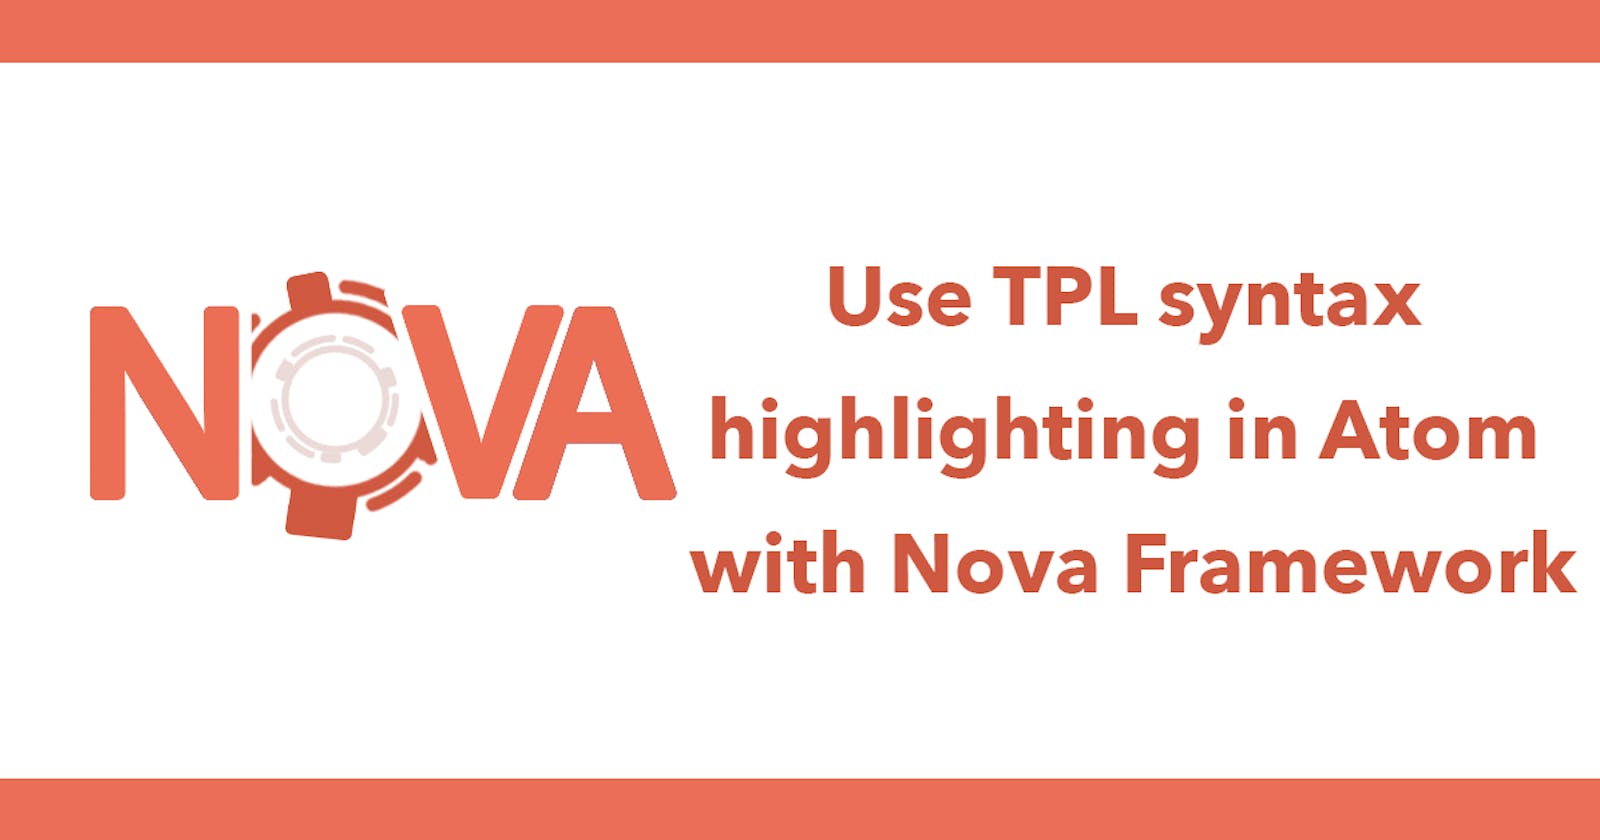 Use TPL syntax highlighting in Atom with Nova Framework